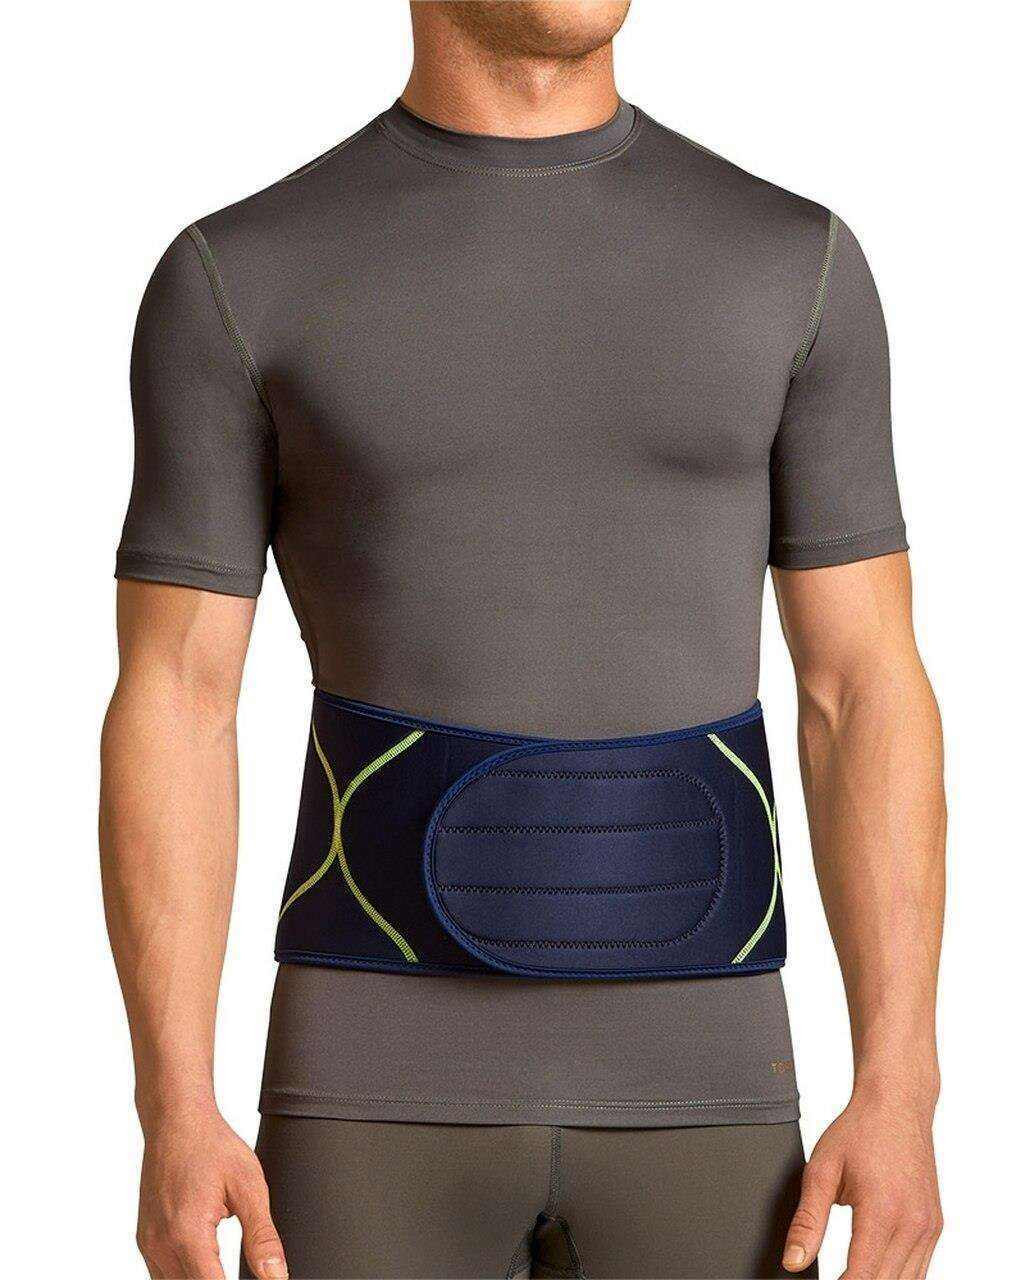 Lumbar Support Belt Back Support Belt, for Women Men Adjustable